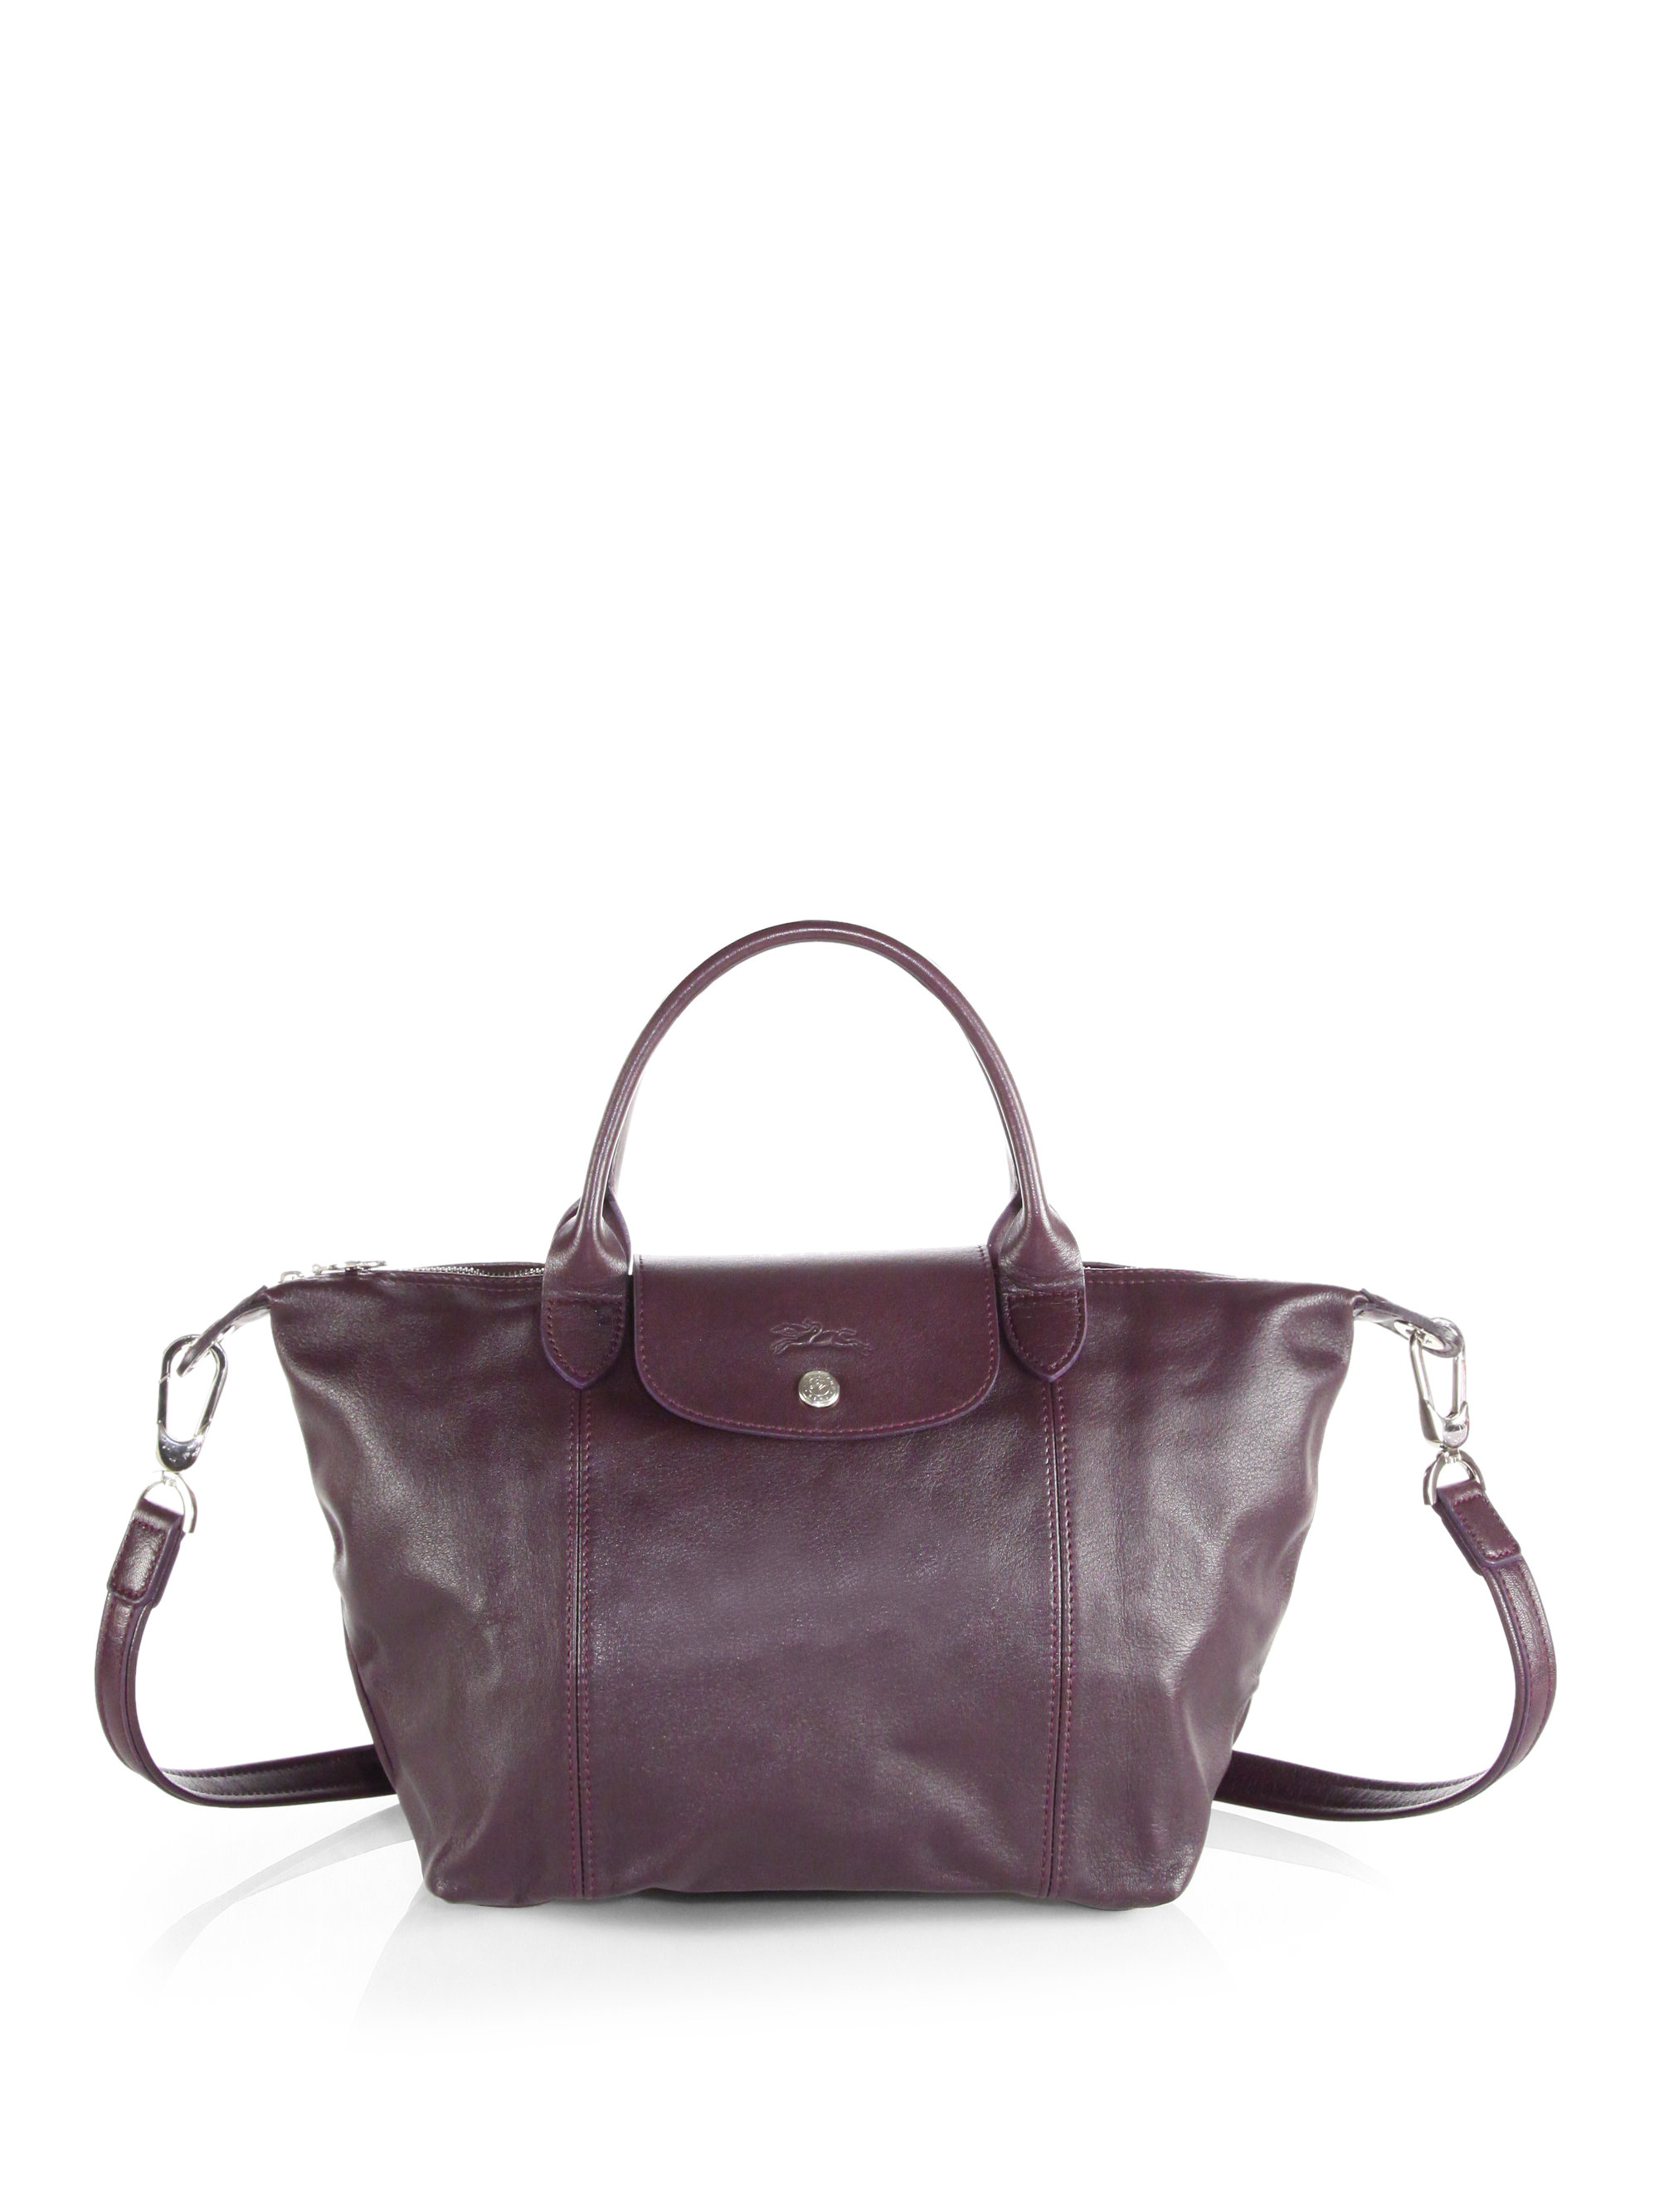 Longchamp Le Pliage Cuir Small Top Handle Bag in Purple (VIOLET) Lyst